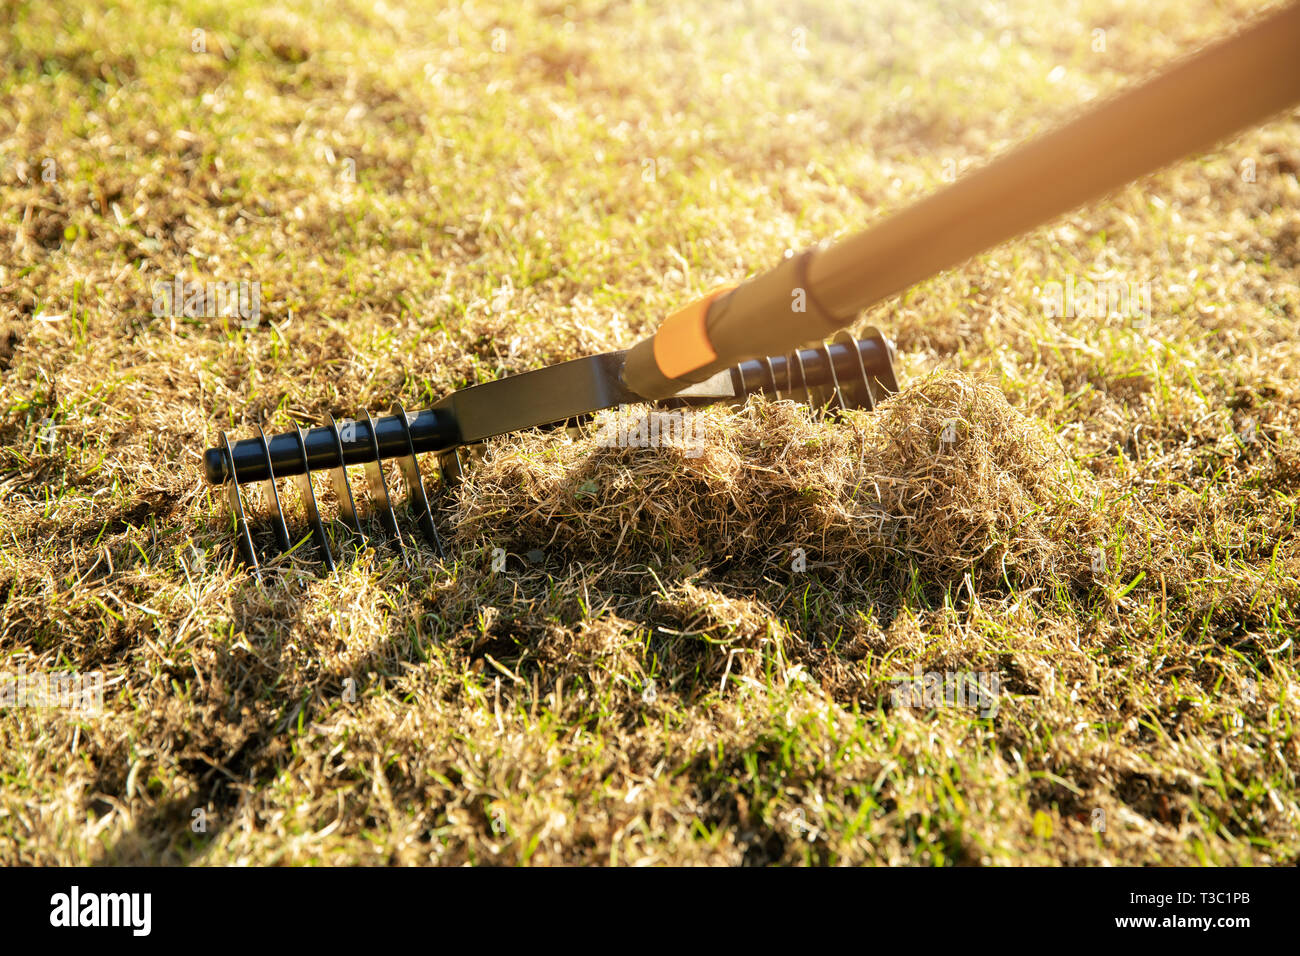 garden lawn aeration with scarifier rake Stock Photo